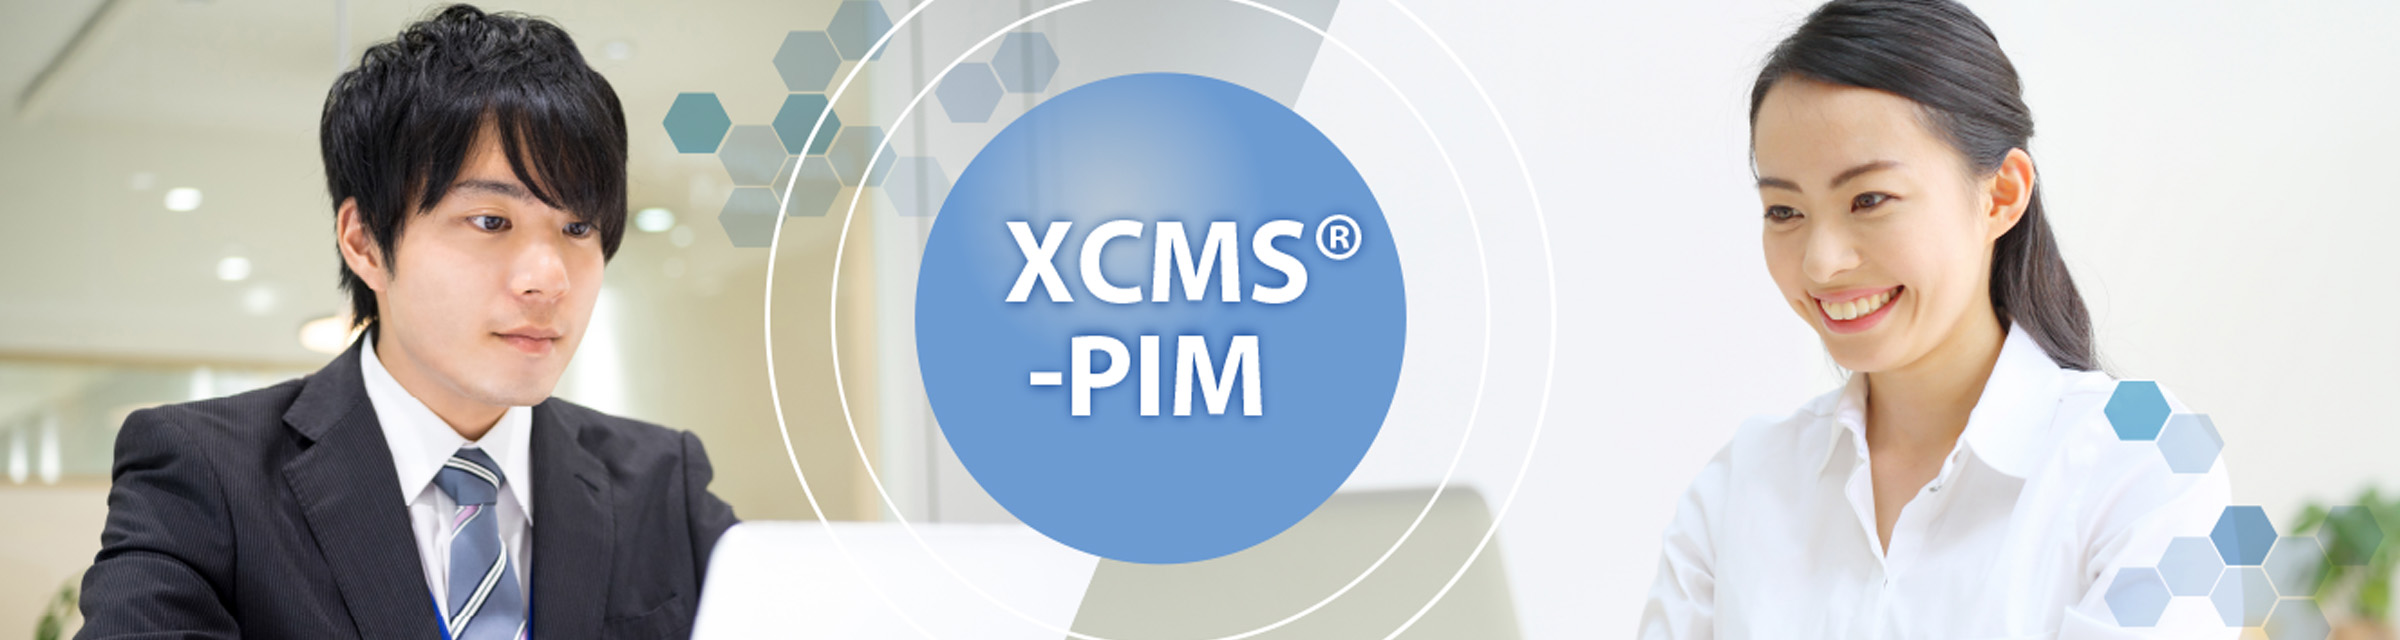 XCMS®-PIM